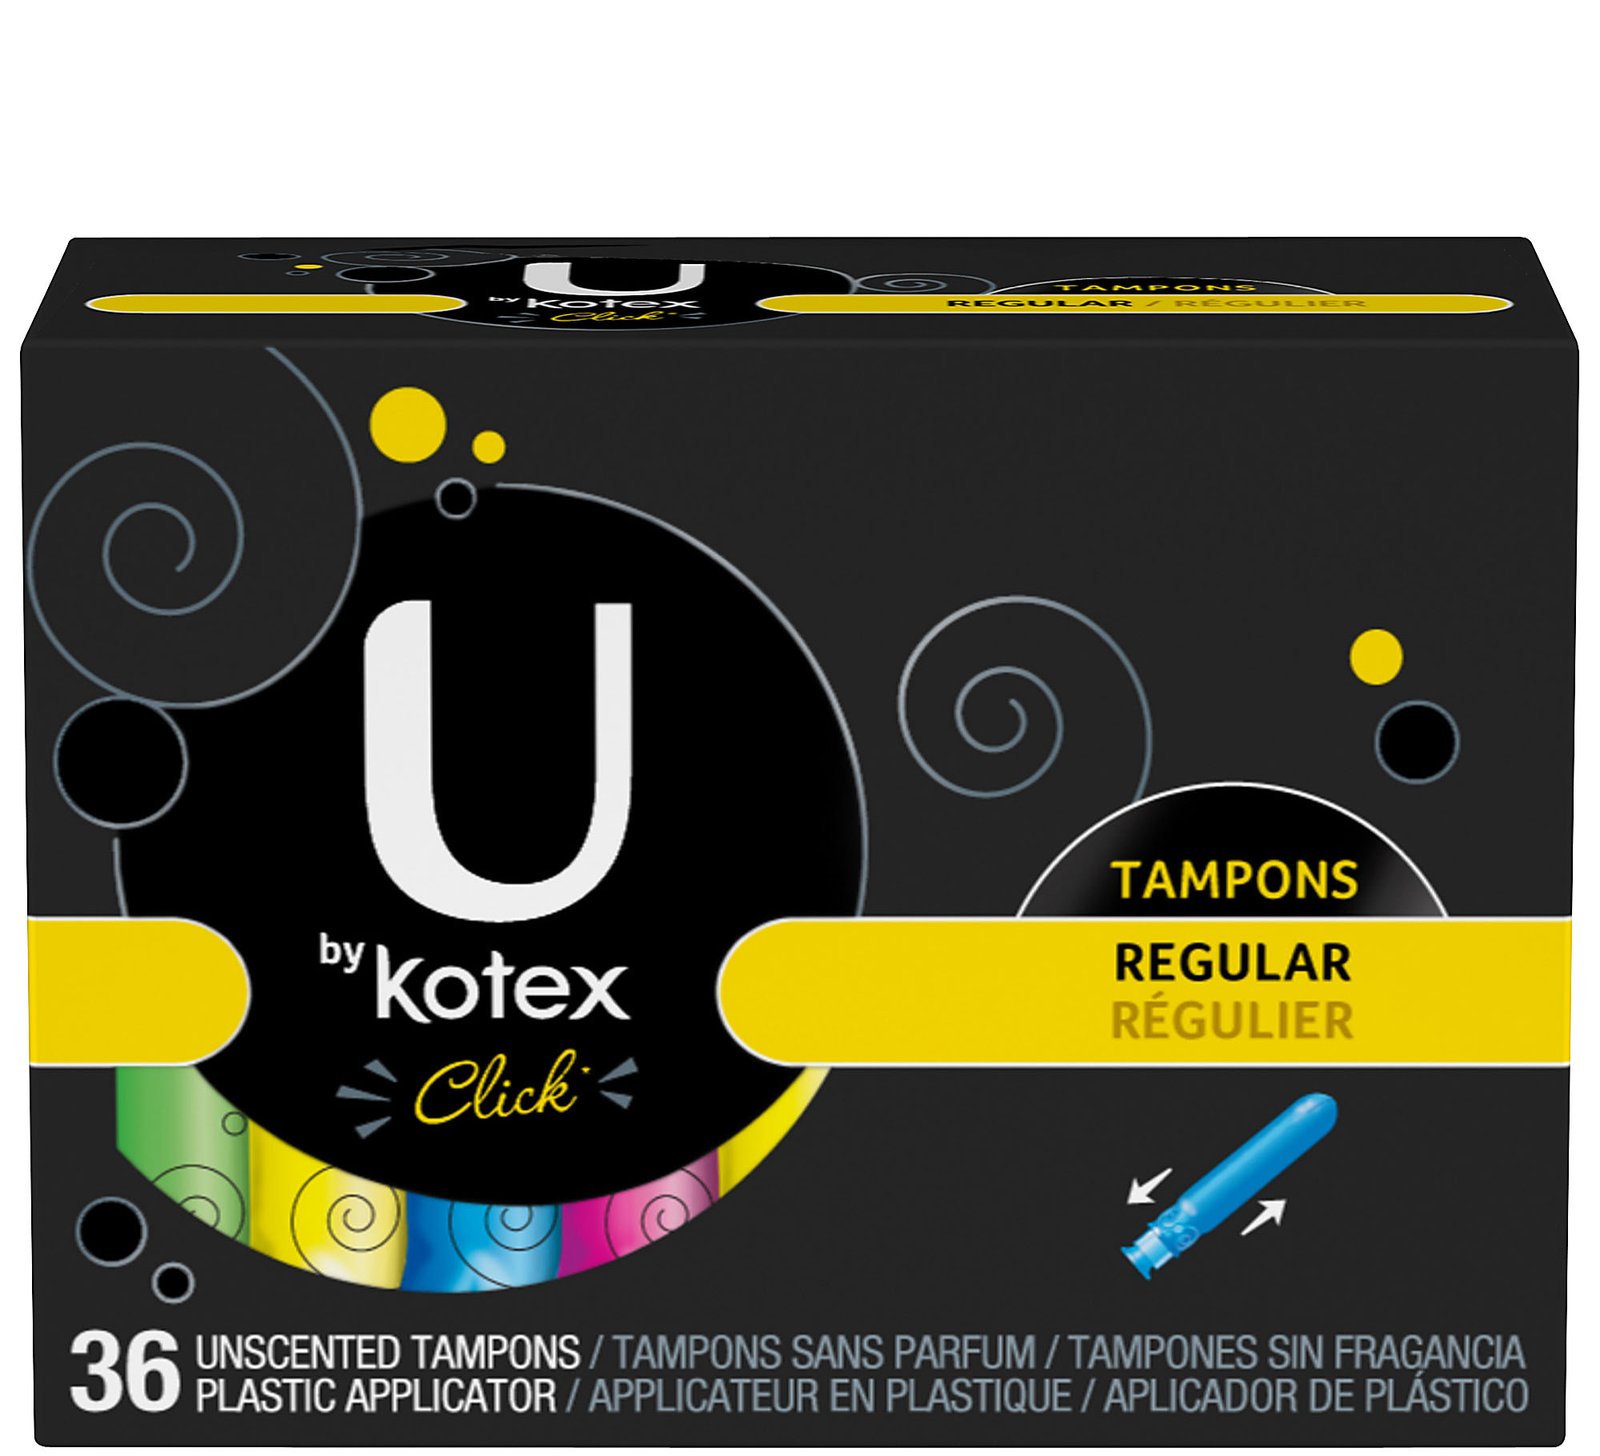 U by Kotex Tampon & Pad Samples